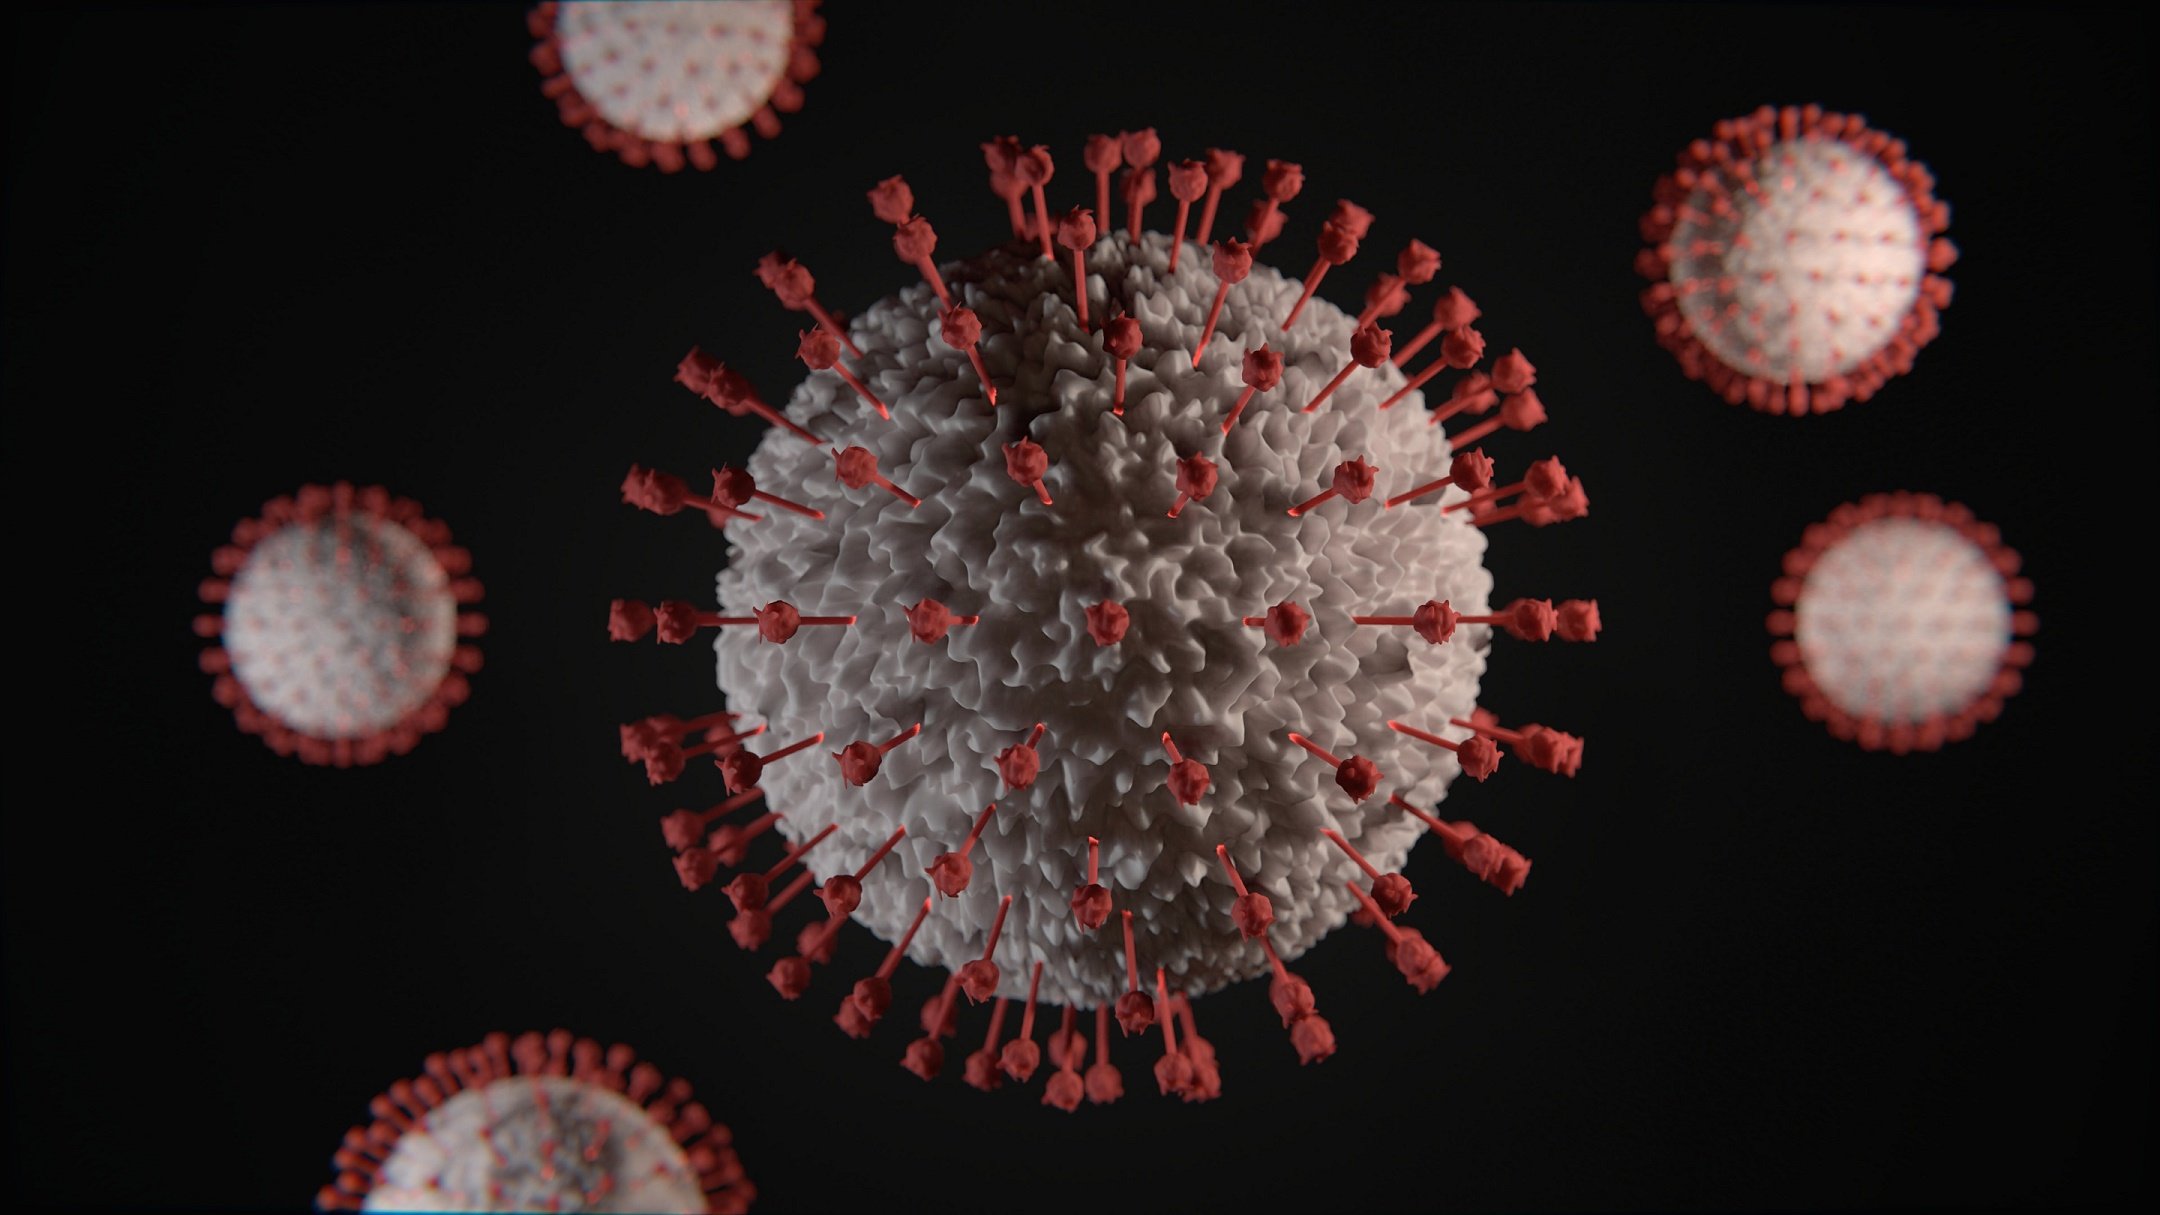 Coronaviruses against a black background